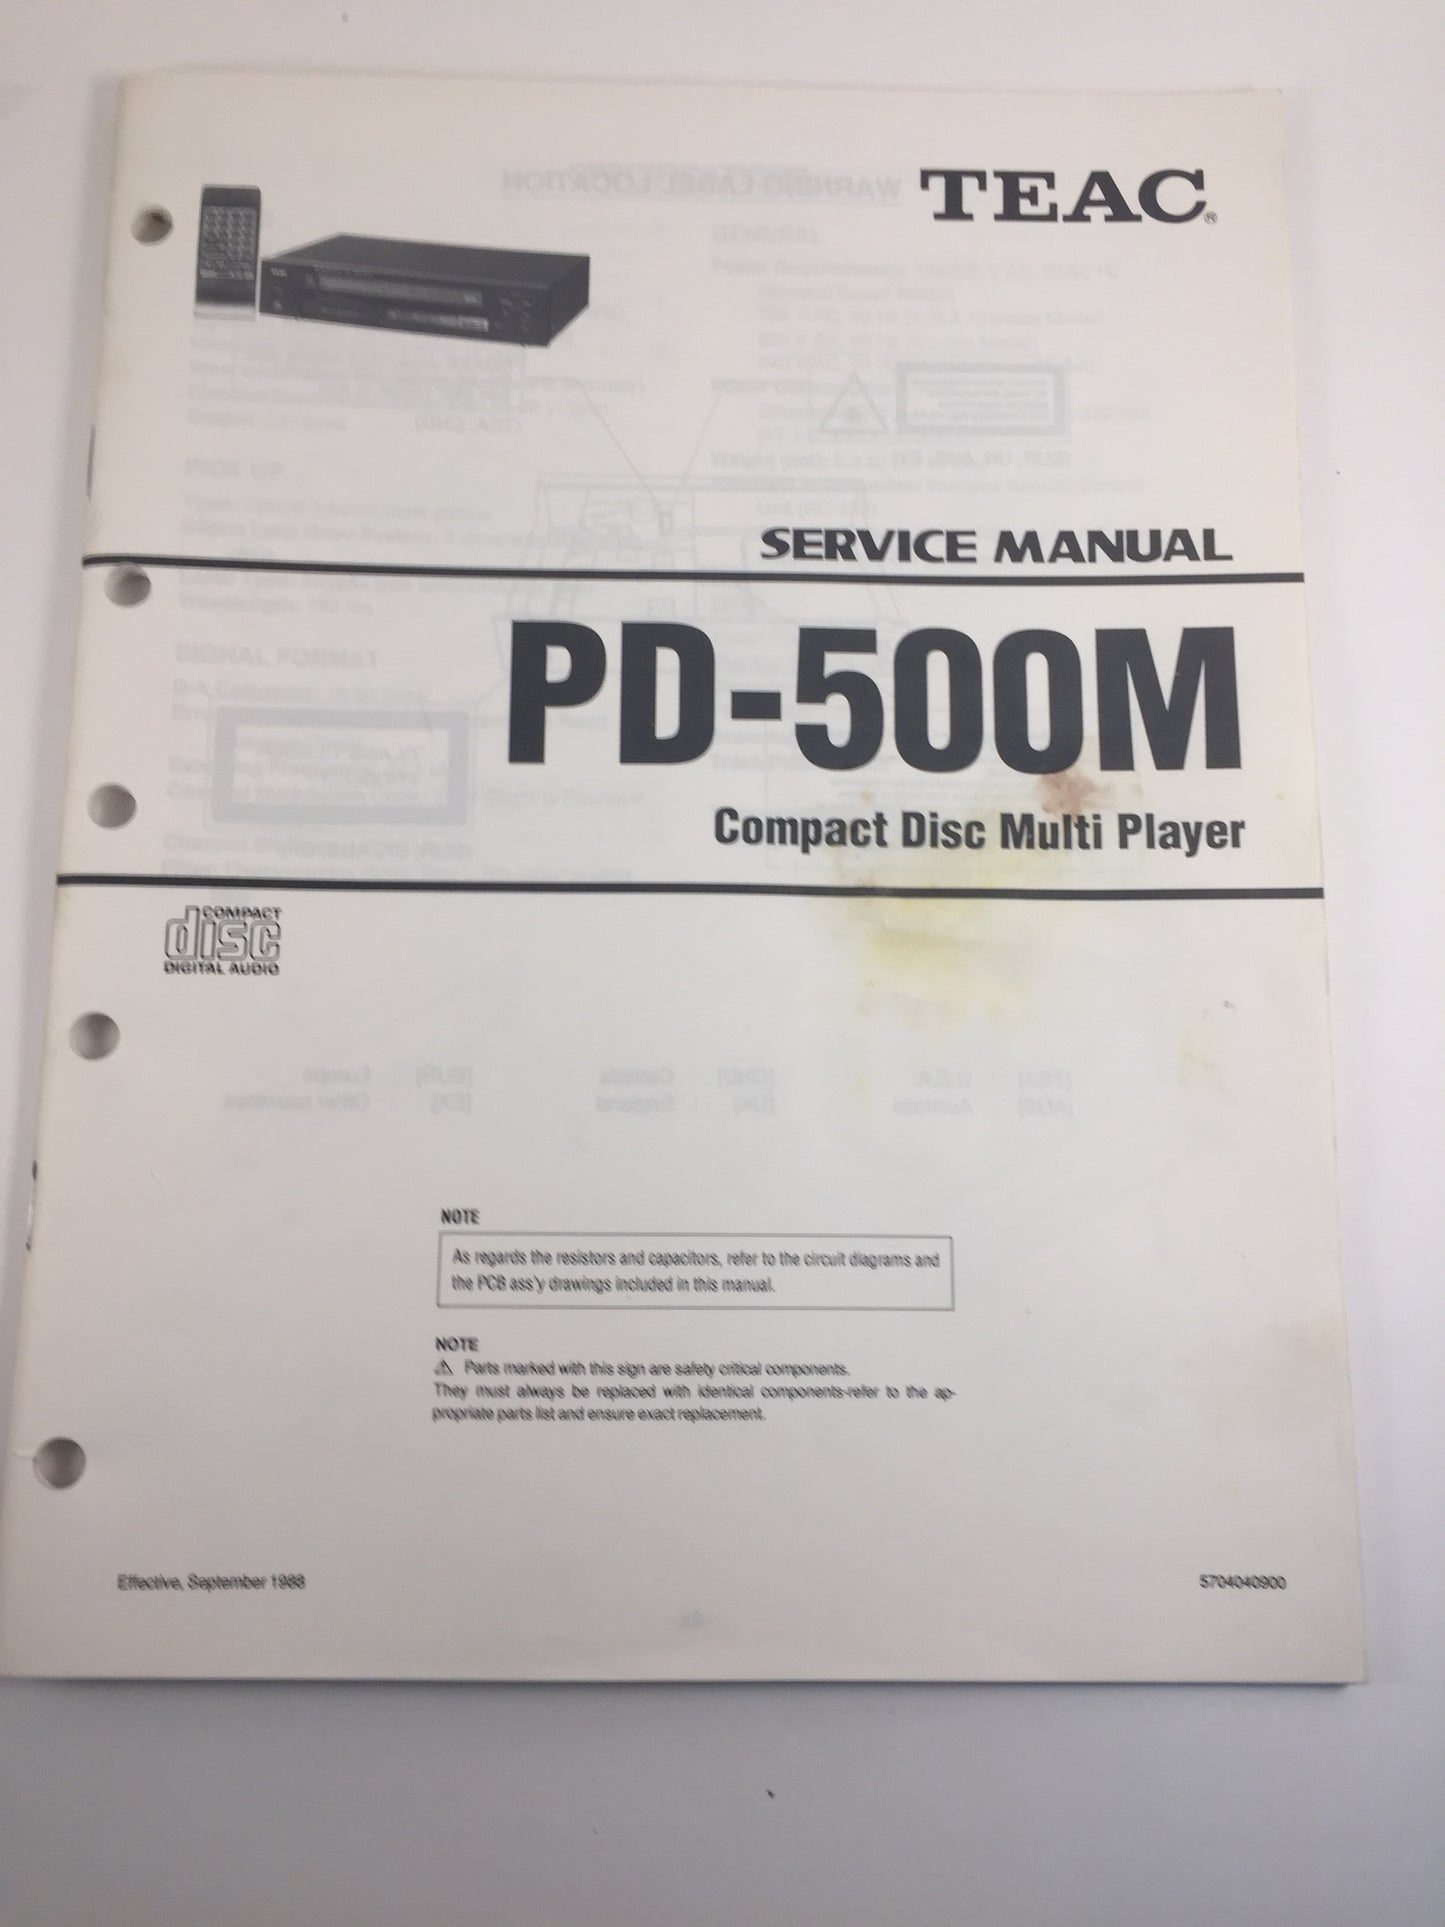 TEAC PD-500M Compact Disc Multi Player Service Manual